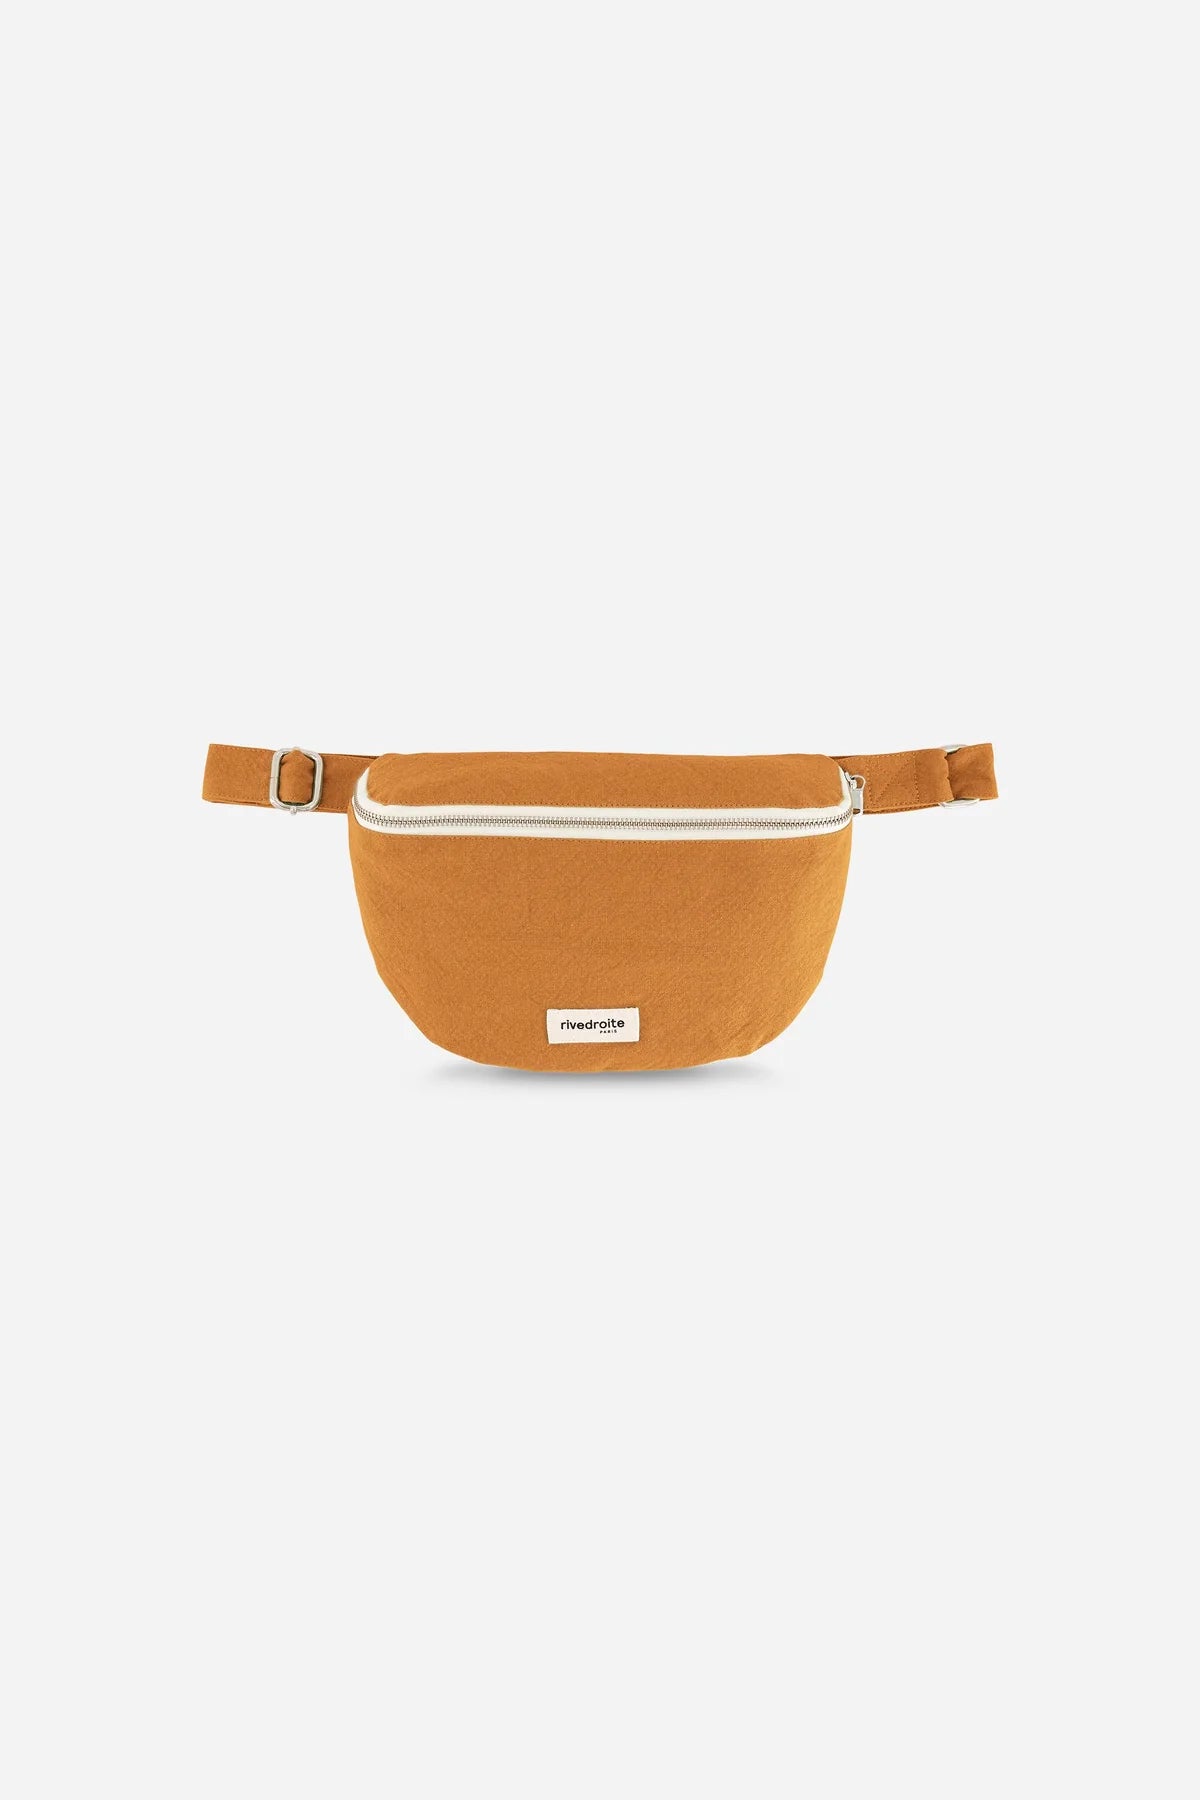 Custine - The Waist Bag Bags Rive Droit Turmeric Orange  